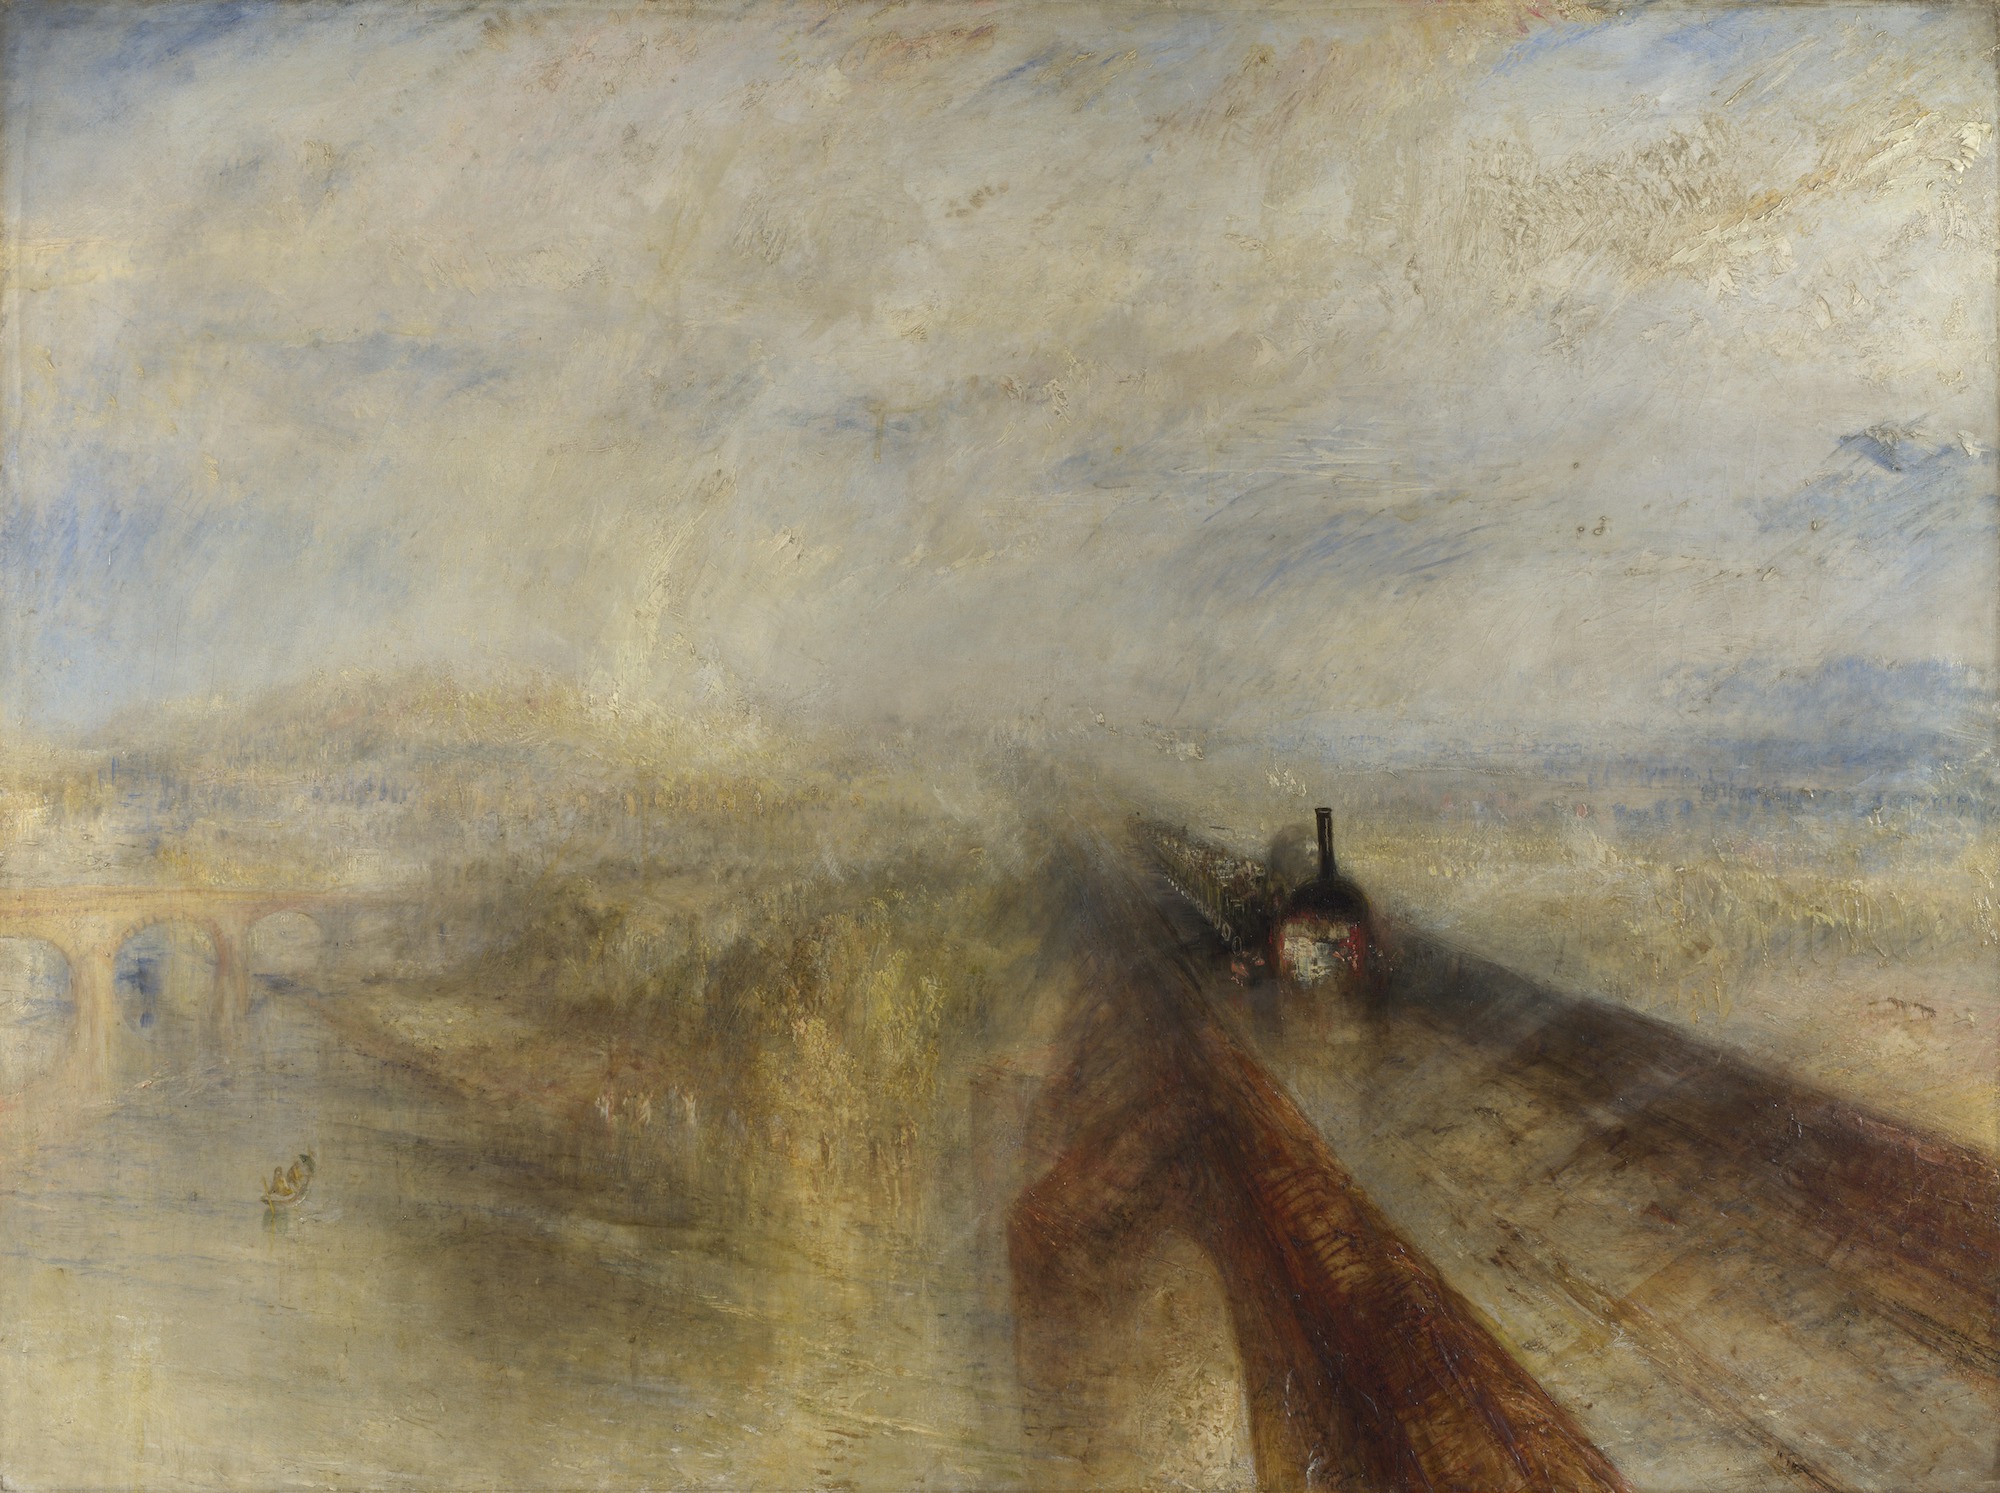 Chuva, Vapor e Velocidade – A Grande Rodovia do Oeste by Joseph Mallord William Turner - 1844 